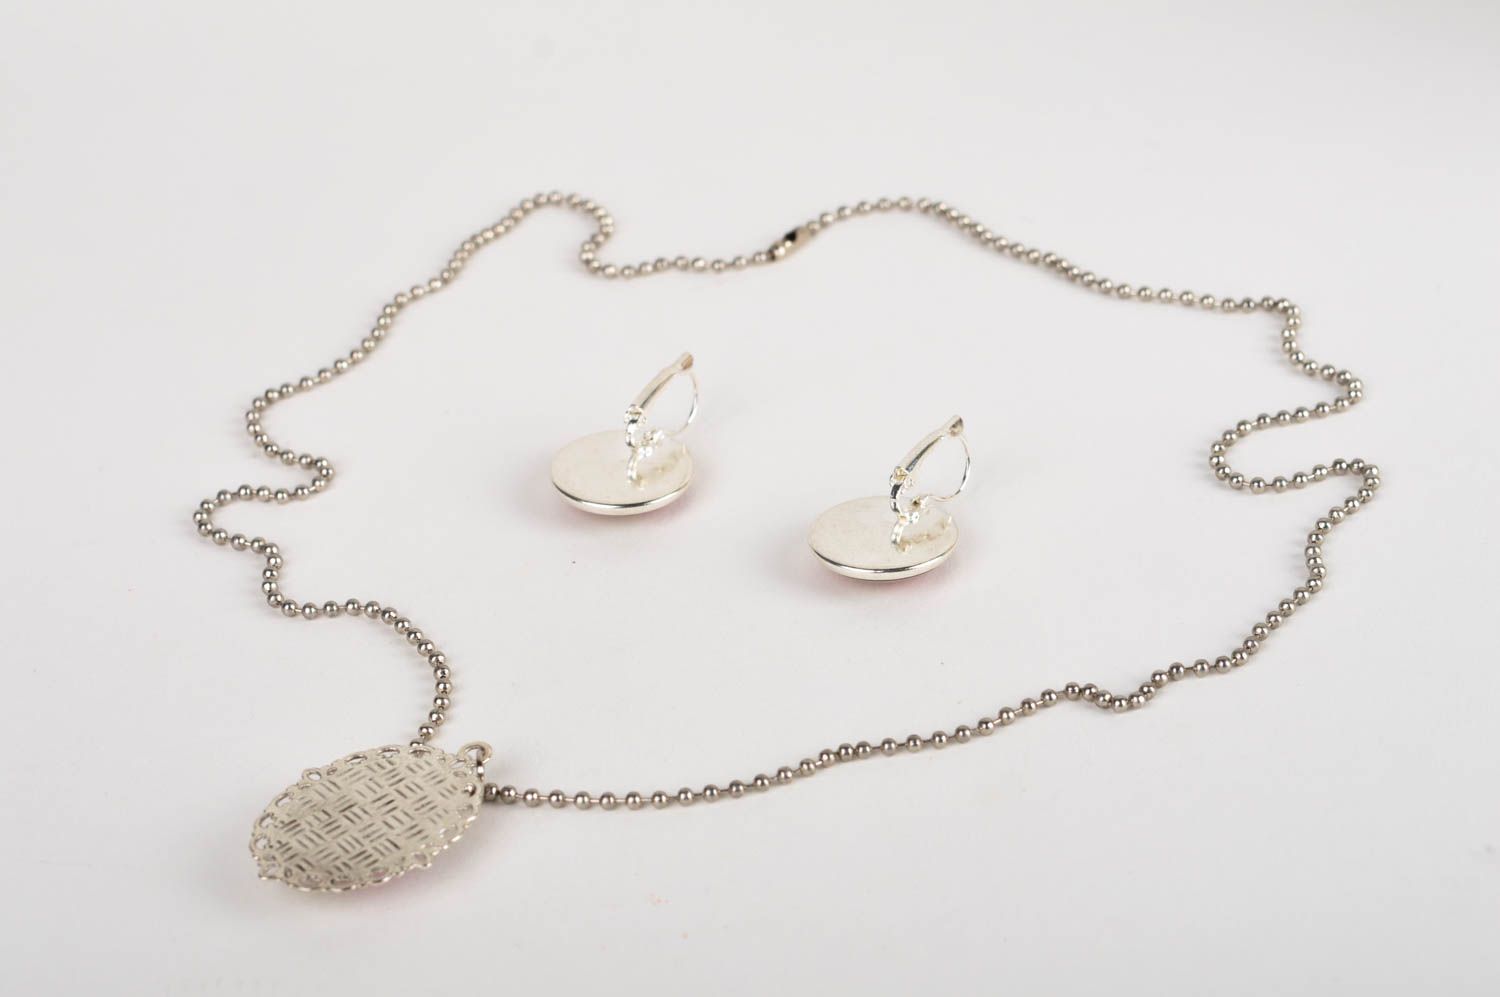 Handmade metal accessories stylish set of jewelry designer earrings and pendant photo 5